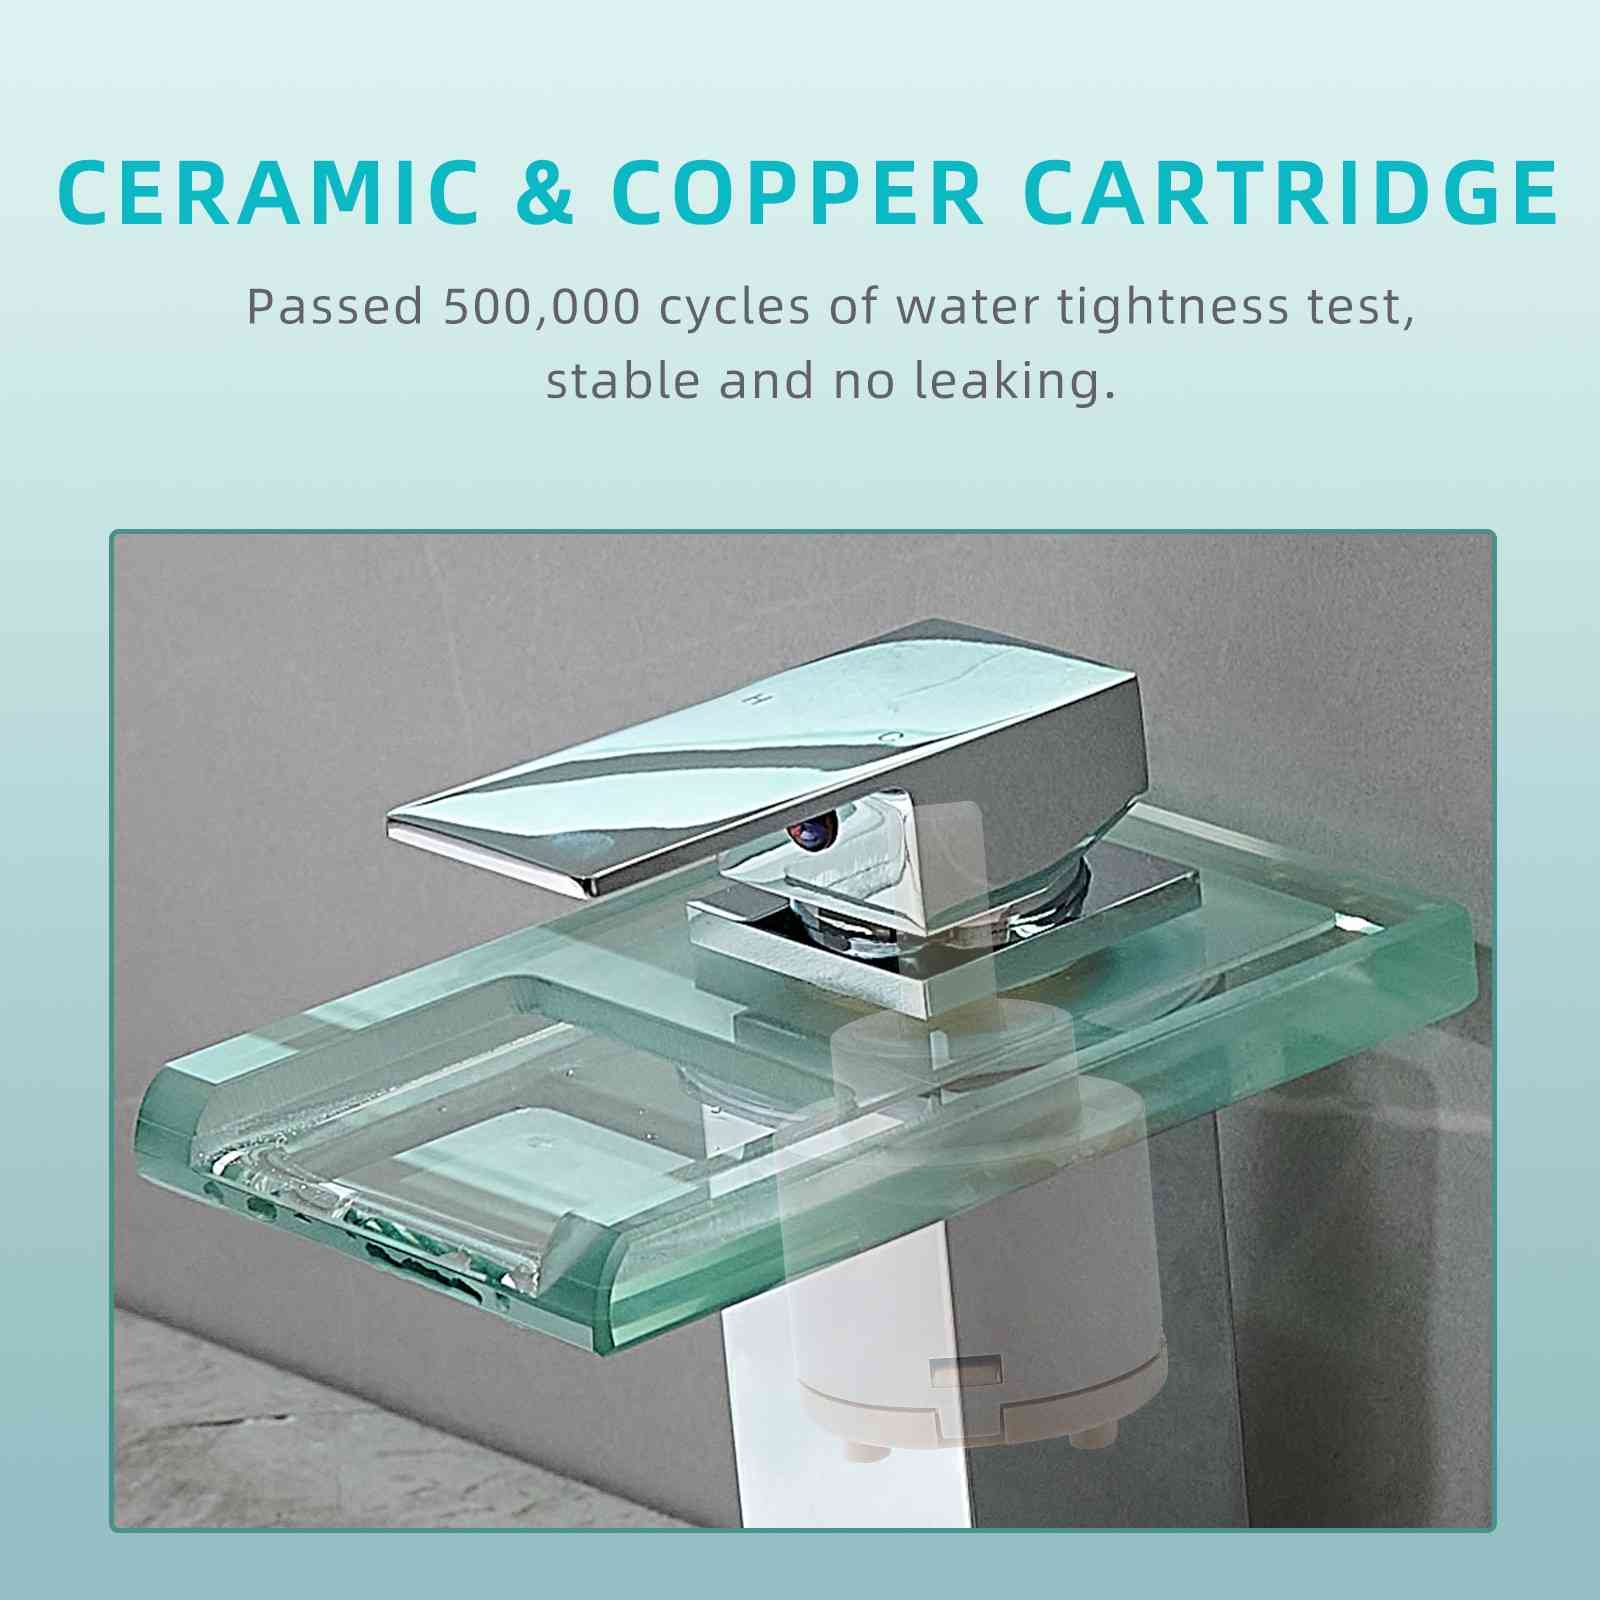 Chrome ceramic and copper cartridge faucet